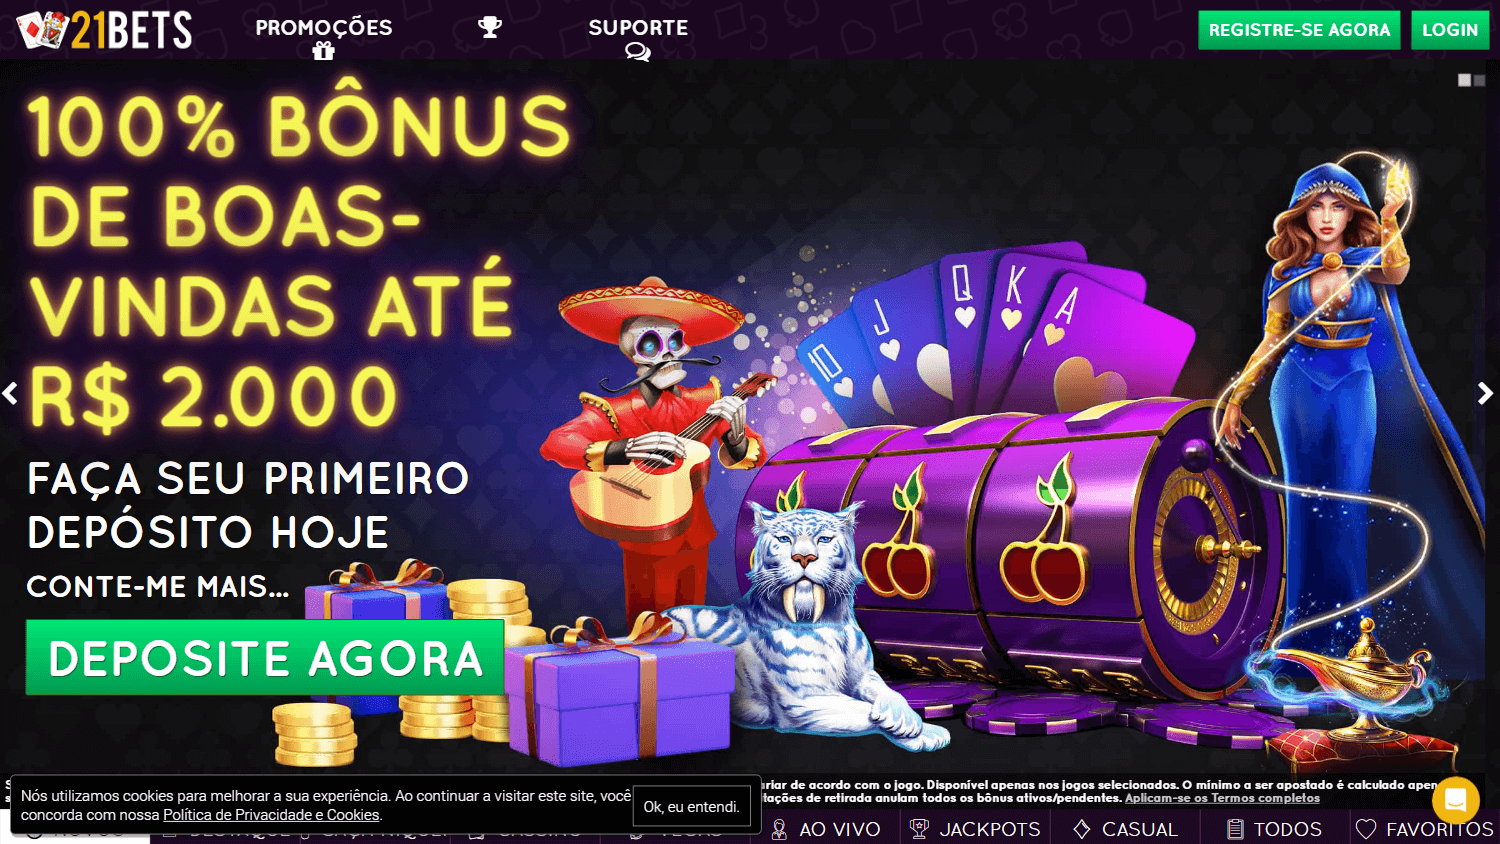 21bets_casino_promotions_desktop